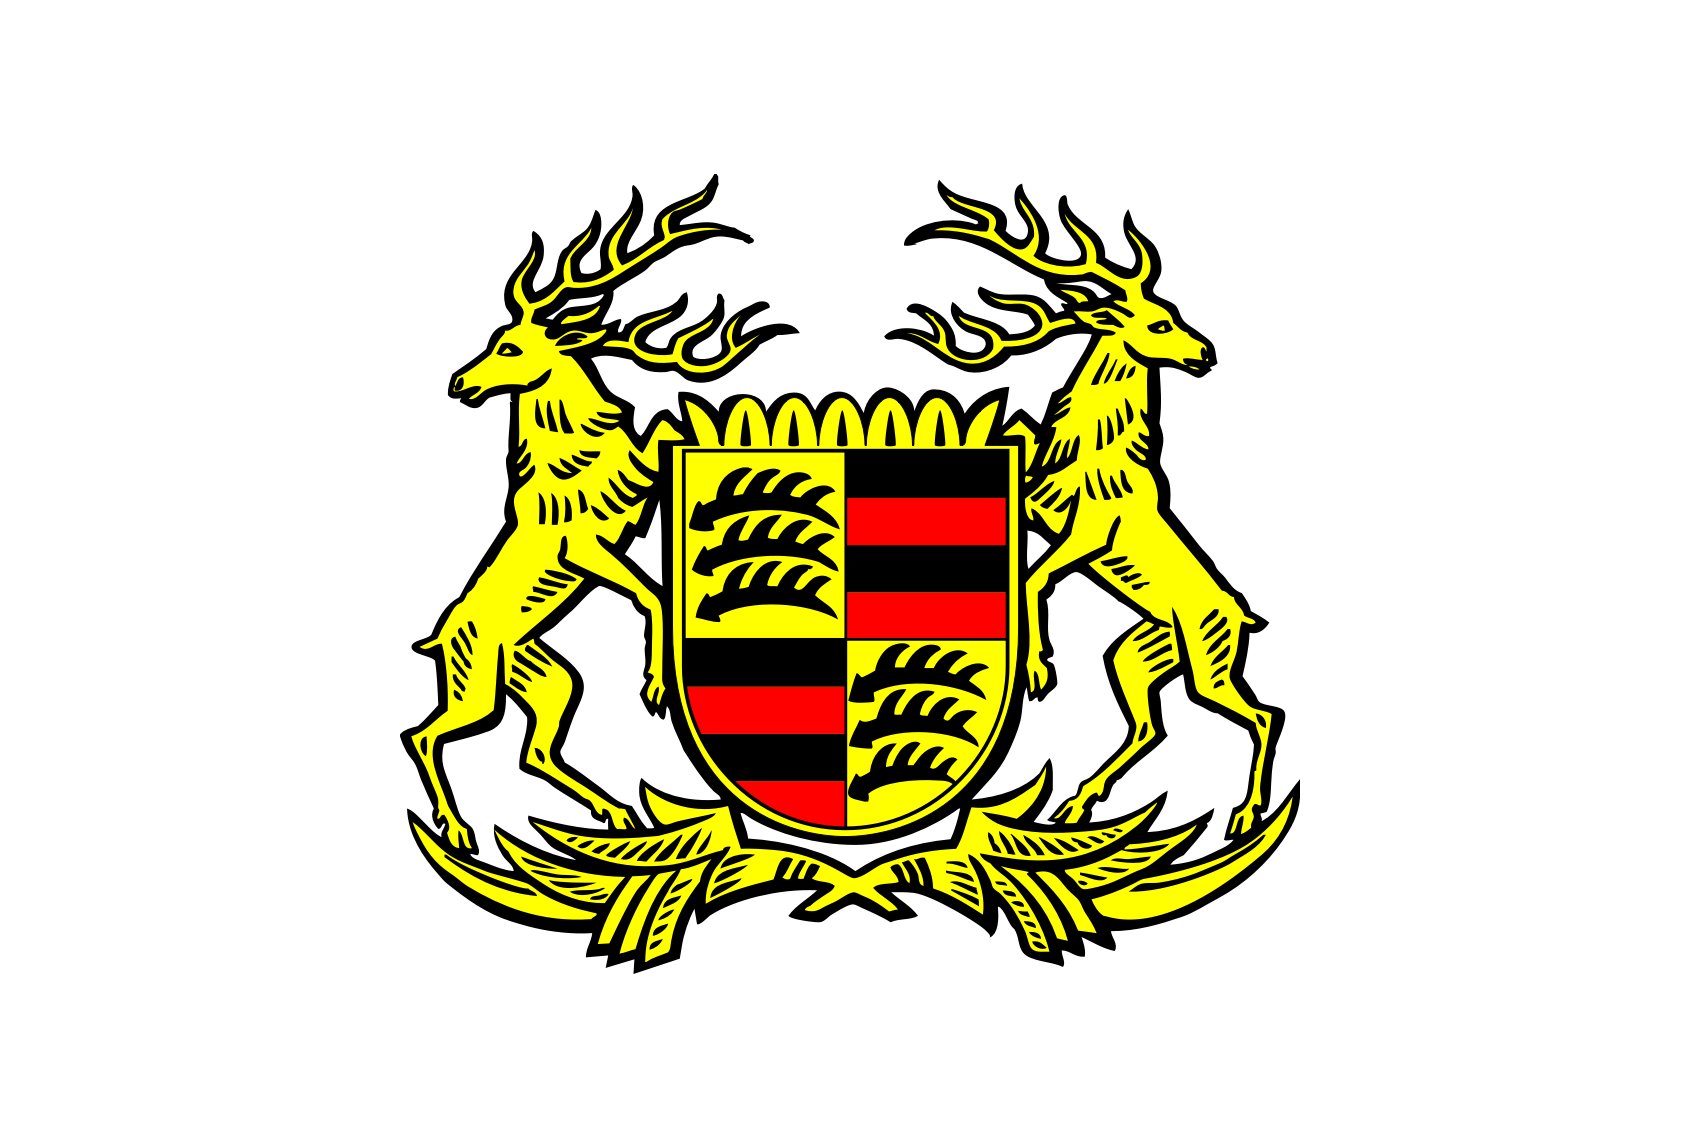 Wappen des Freistaats Württemberg